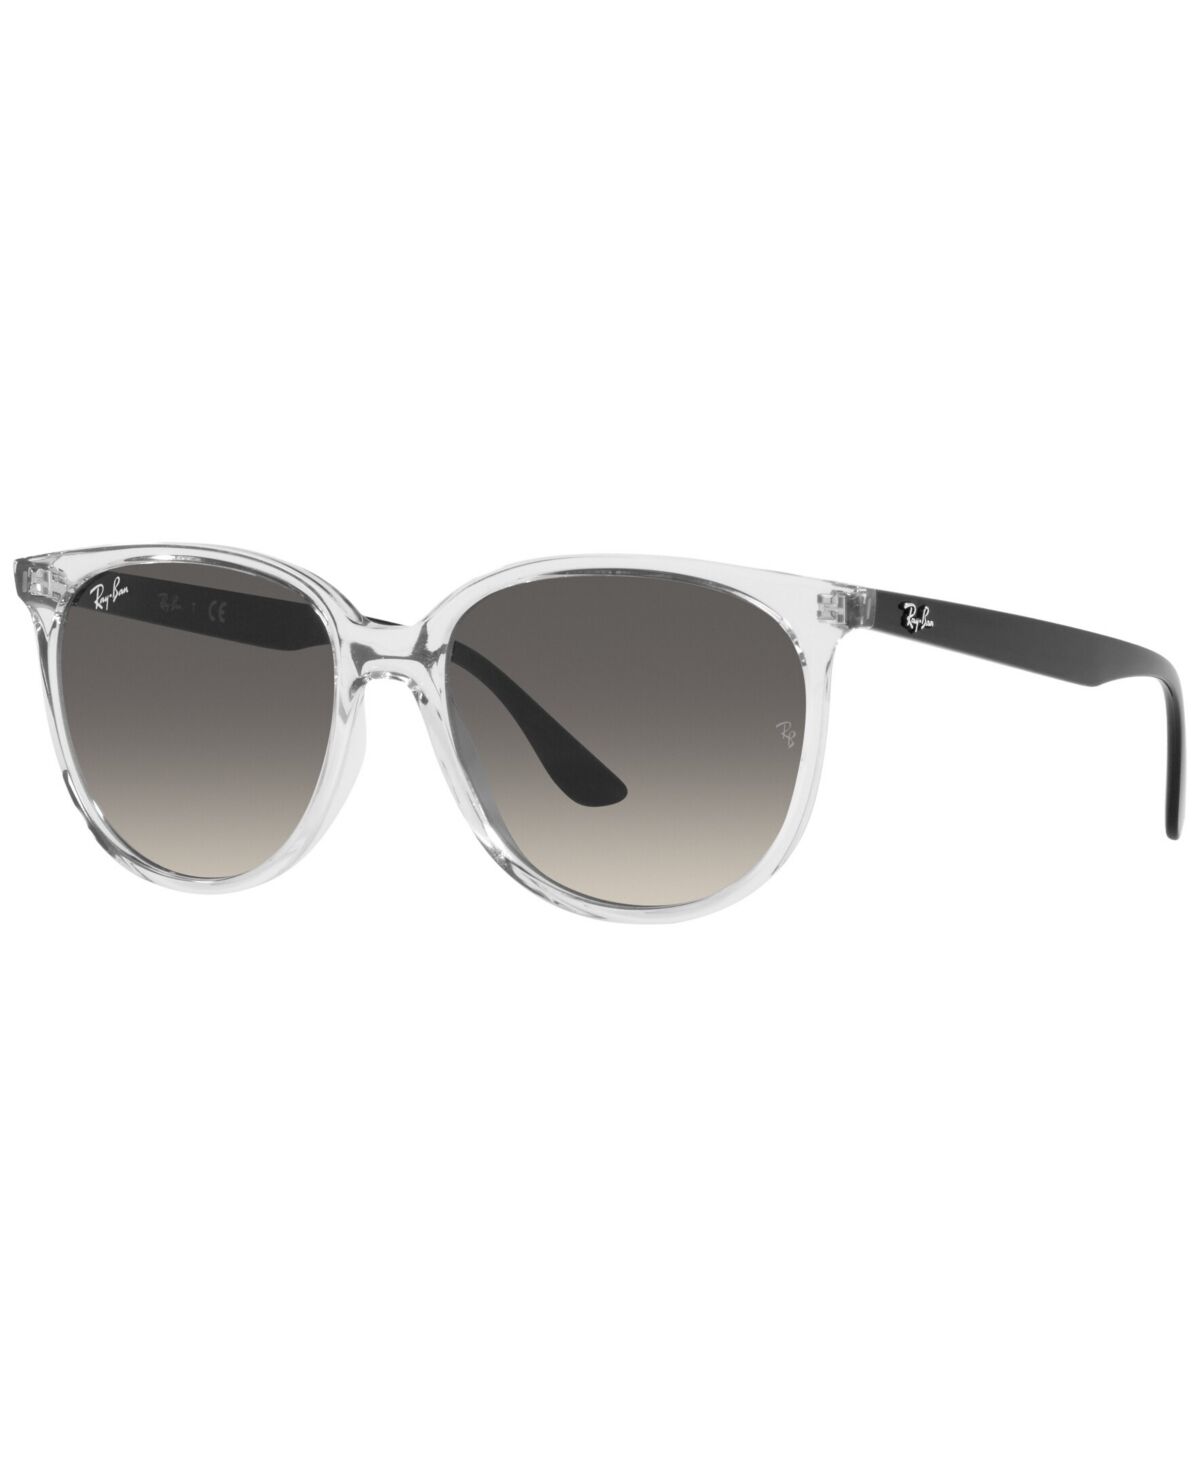 Ray-Ban Women's Sunglasses, RB4378 - Transparent